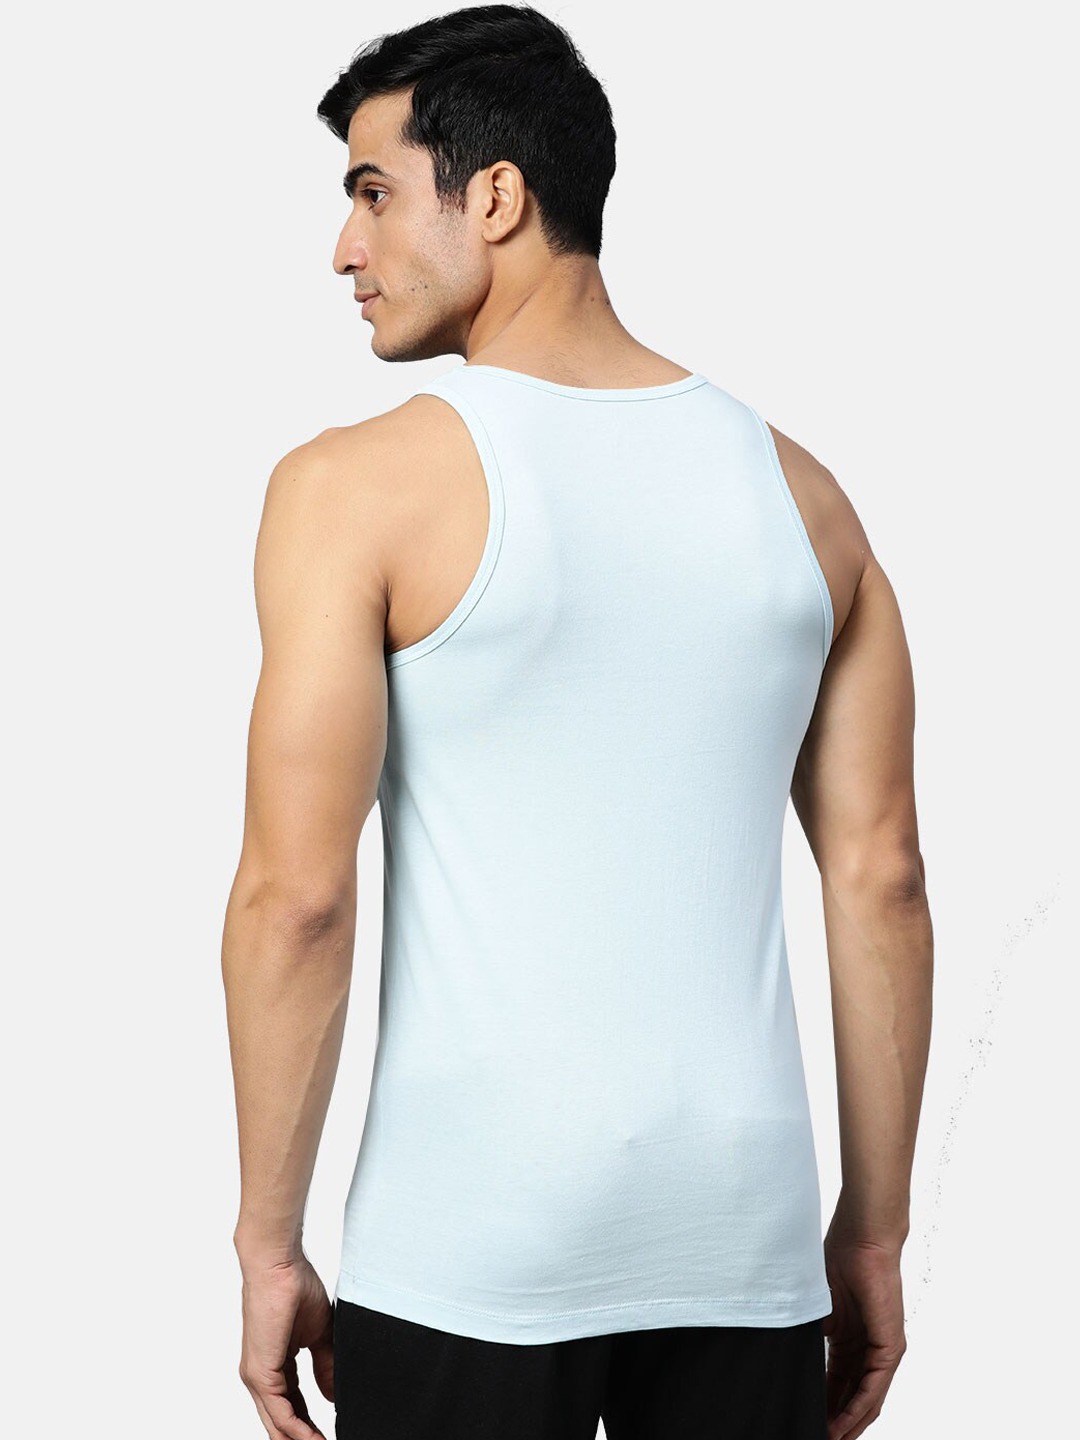 Clothing Innerwear Vests | Almo Wear Men Pack Of 3 Cotton Innerwear Vests - TK22262